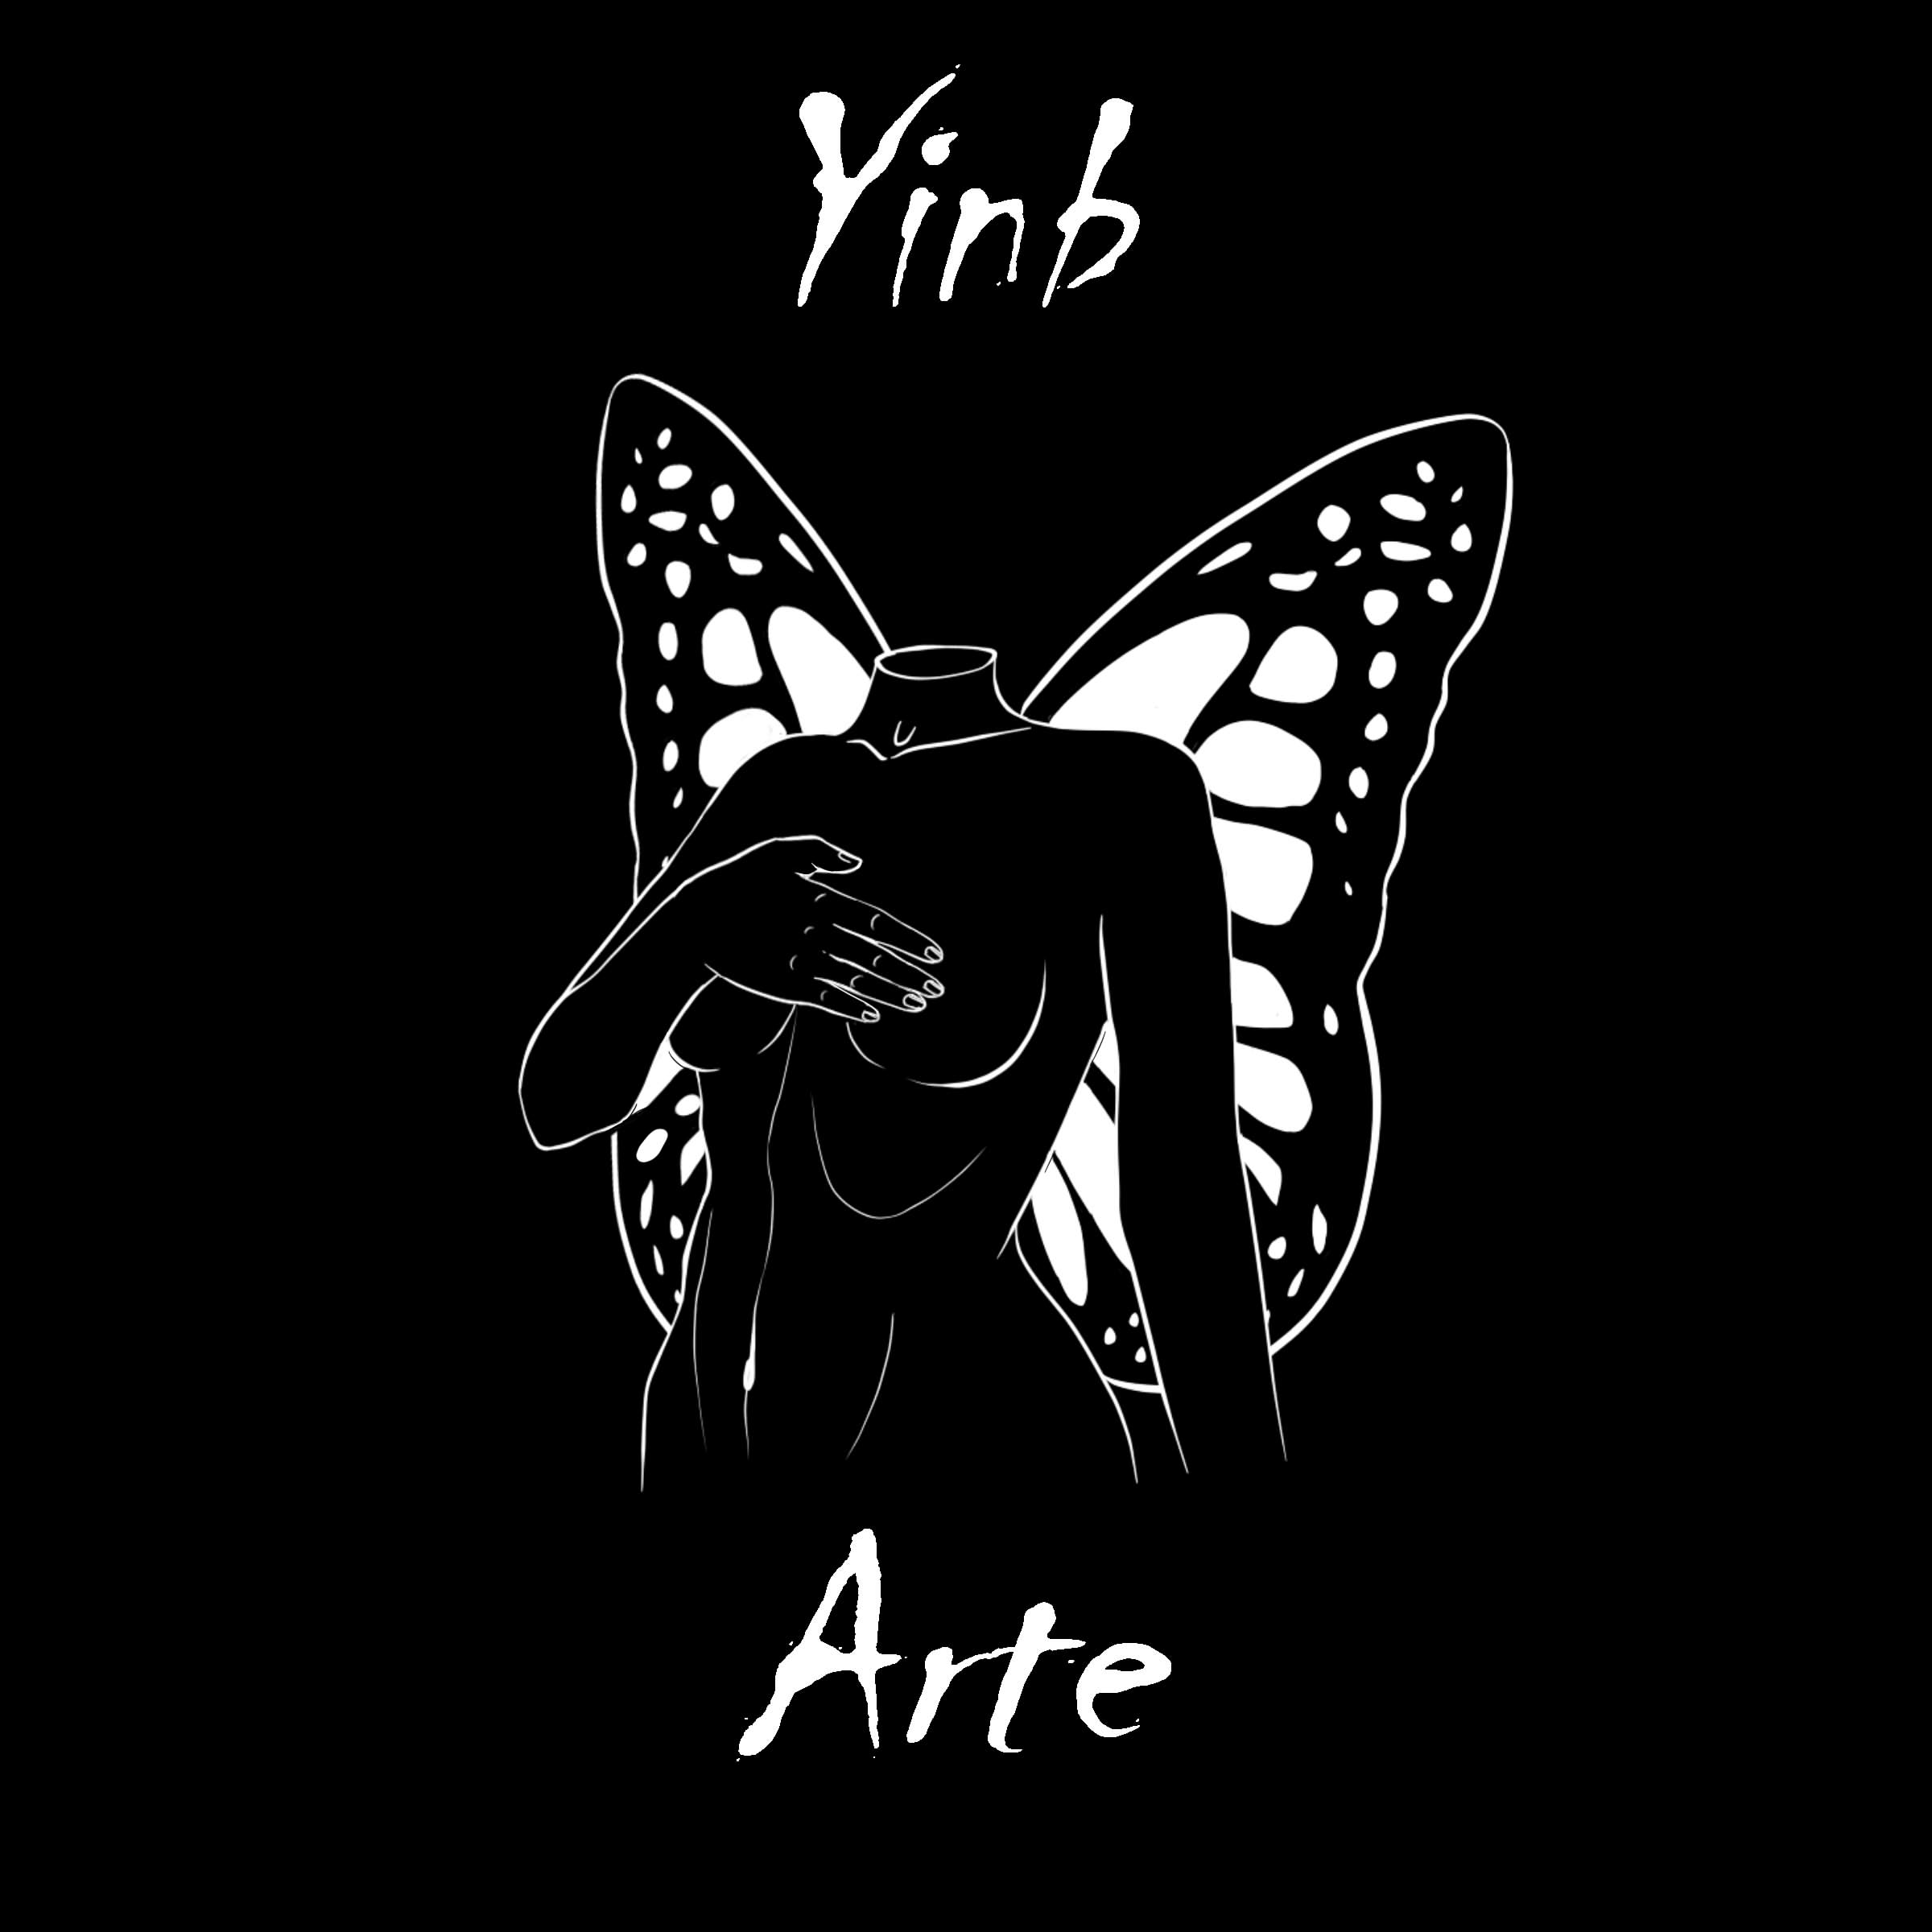 Yinb - Arte